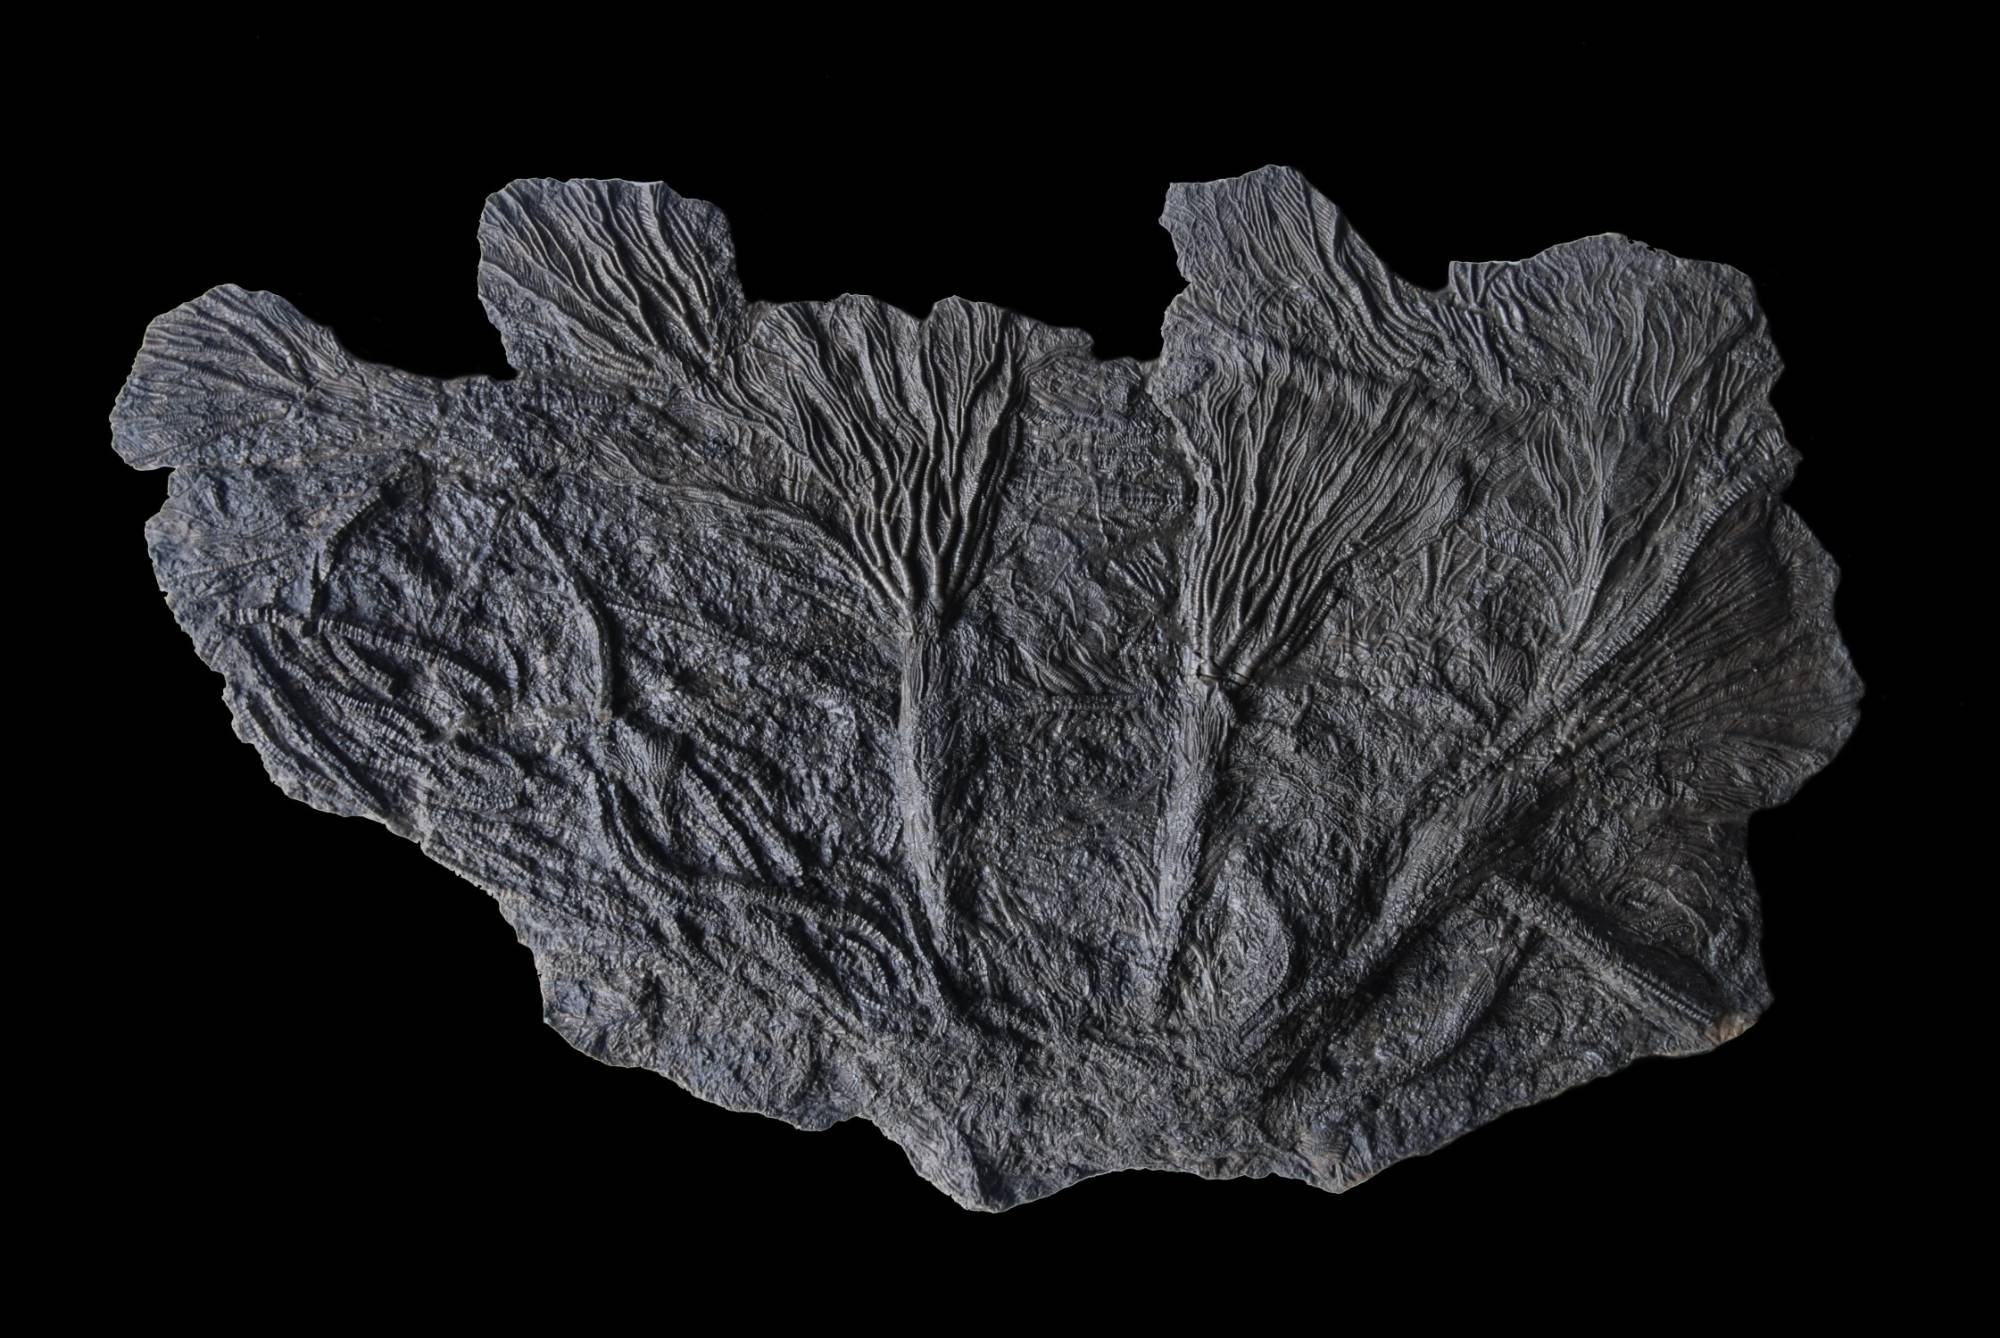 Pentacrinites fossilis; 40x23 cm; Black Ven Marls; Charmouth, Dorset, UK